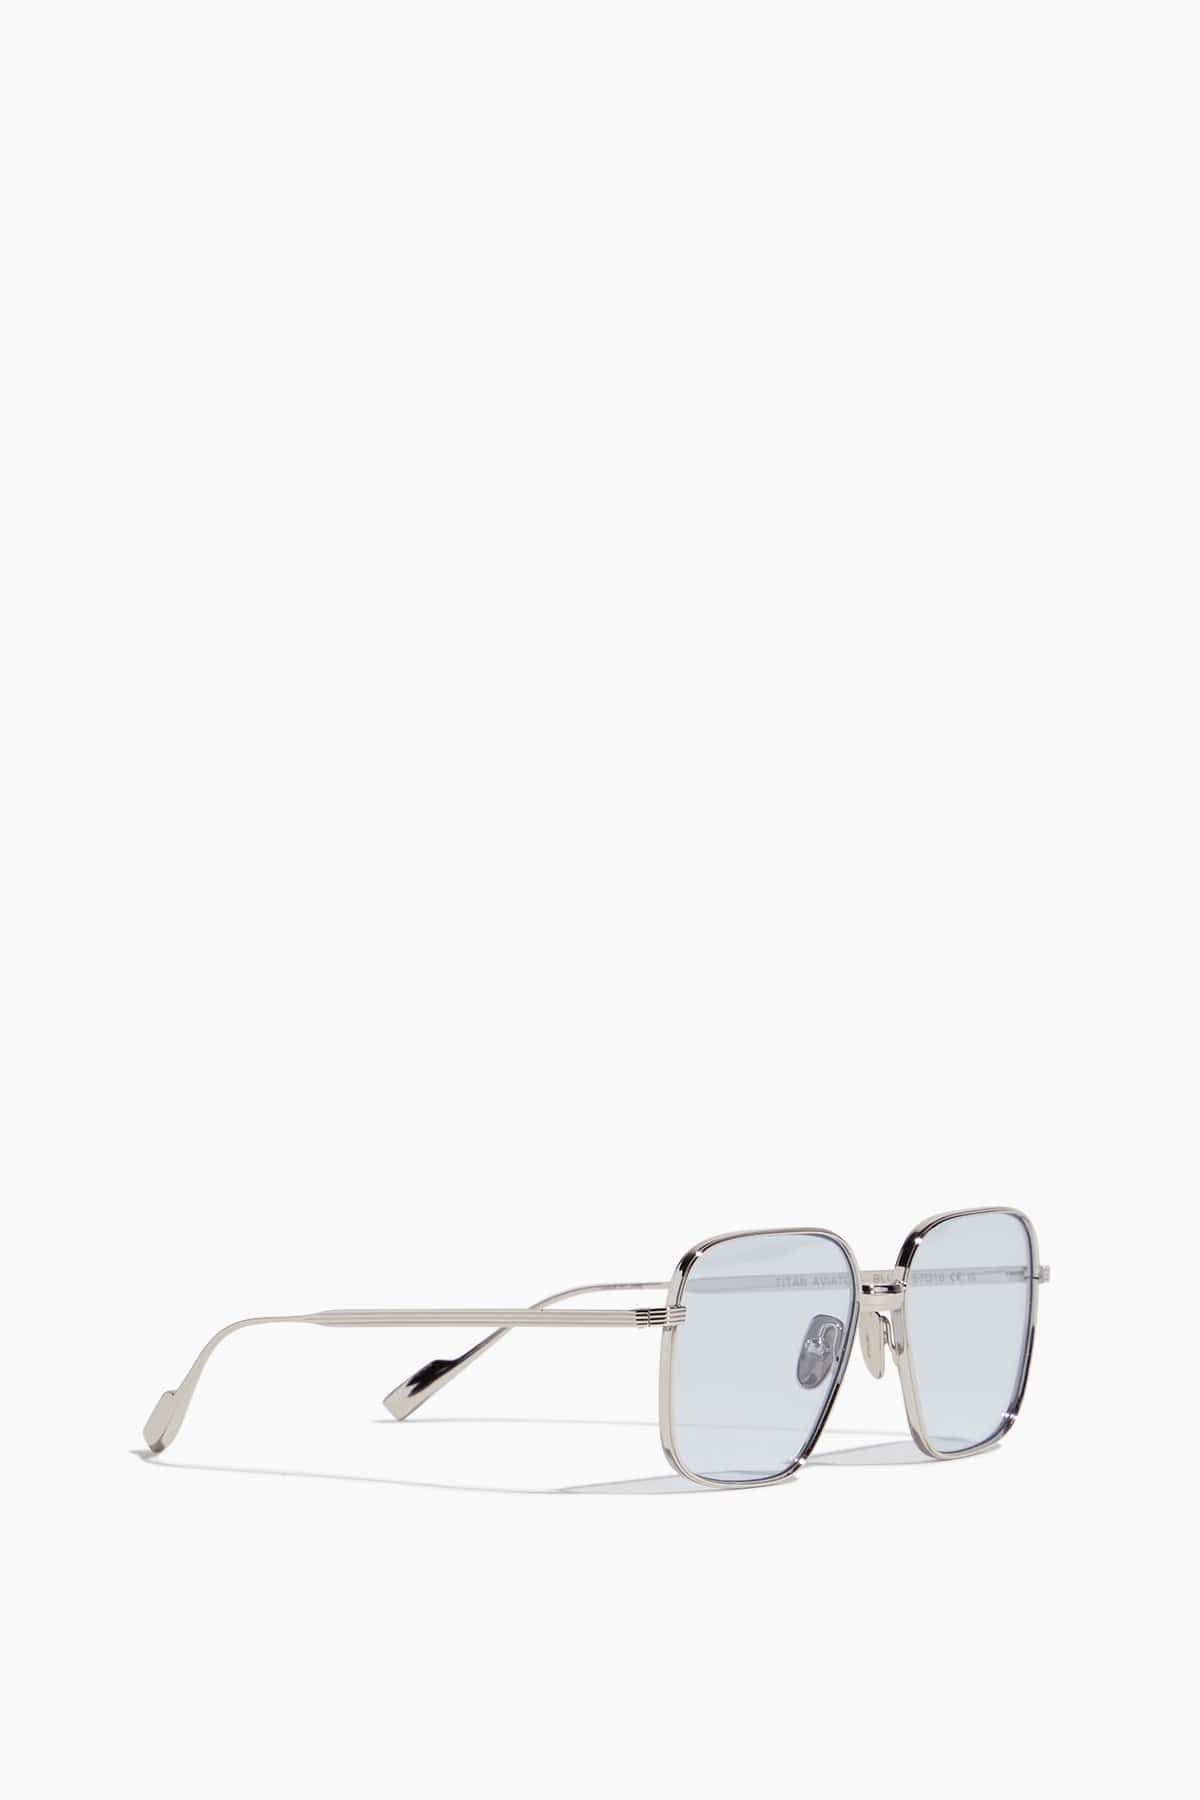 Chimi Sunglasses Sunglasses in Titan Aviator Silver/Blue Chimi Sunglasses in Titan Aviator Silver/Blue